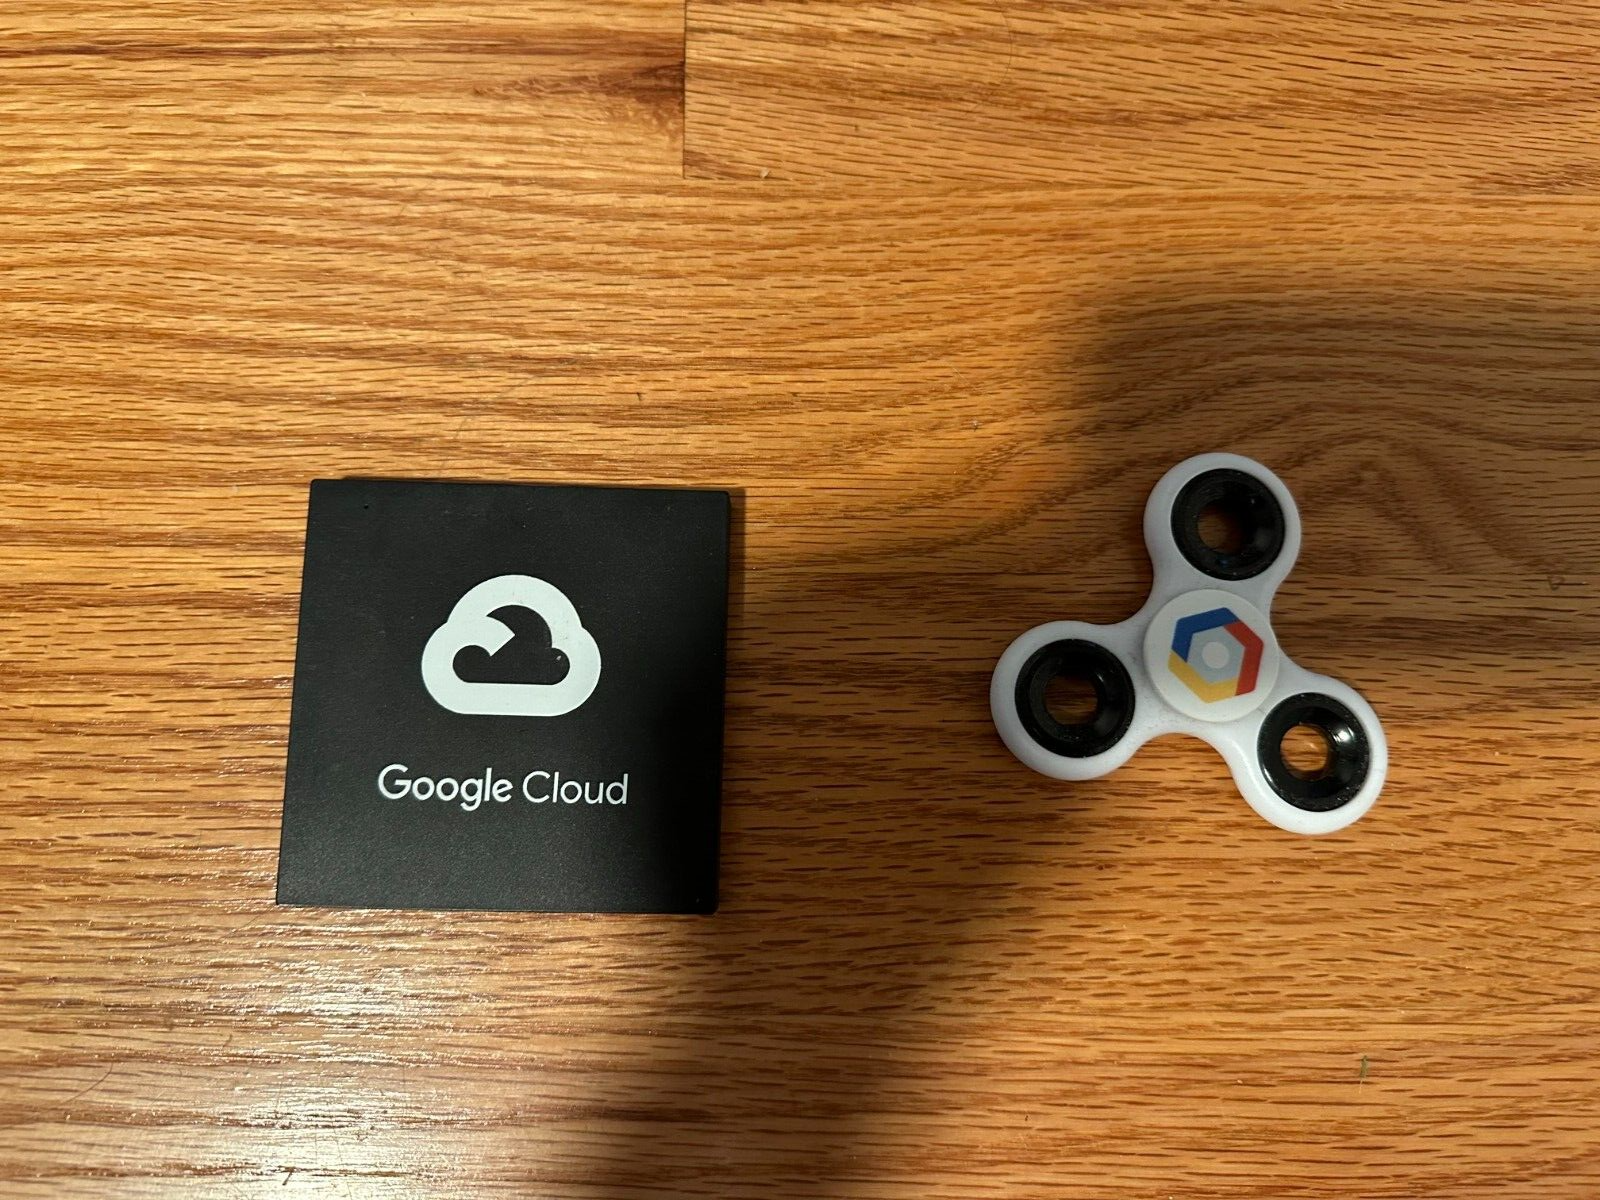 Google Cloud PowerBank and Spin Fidget Rare items